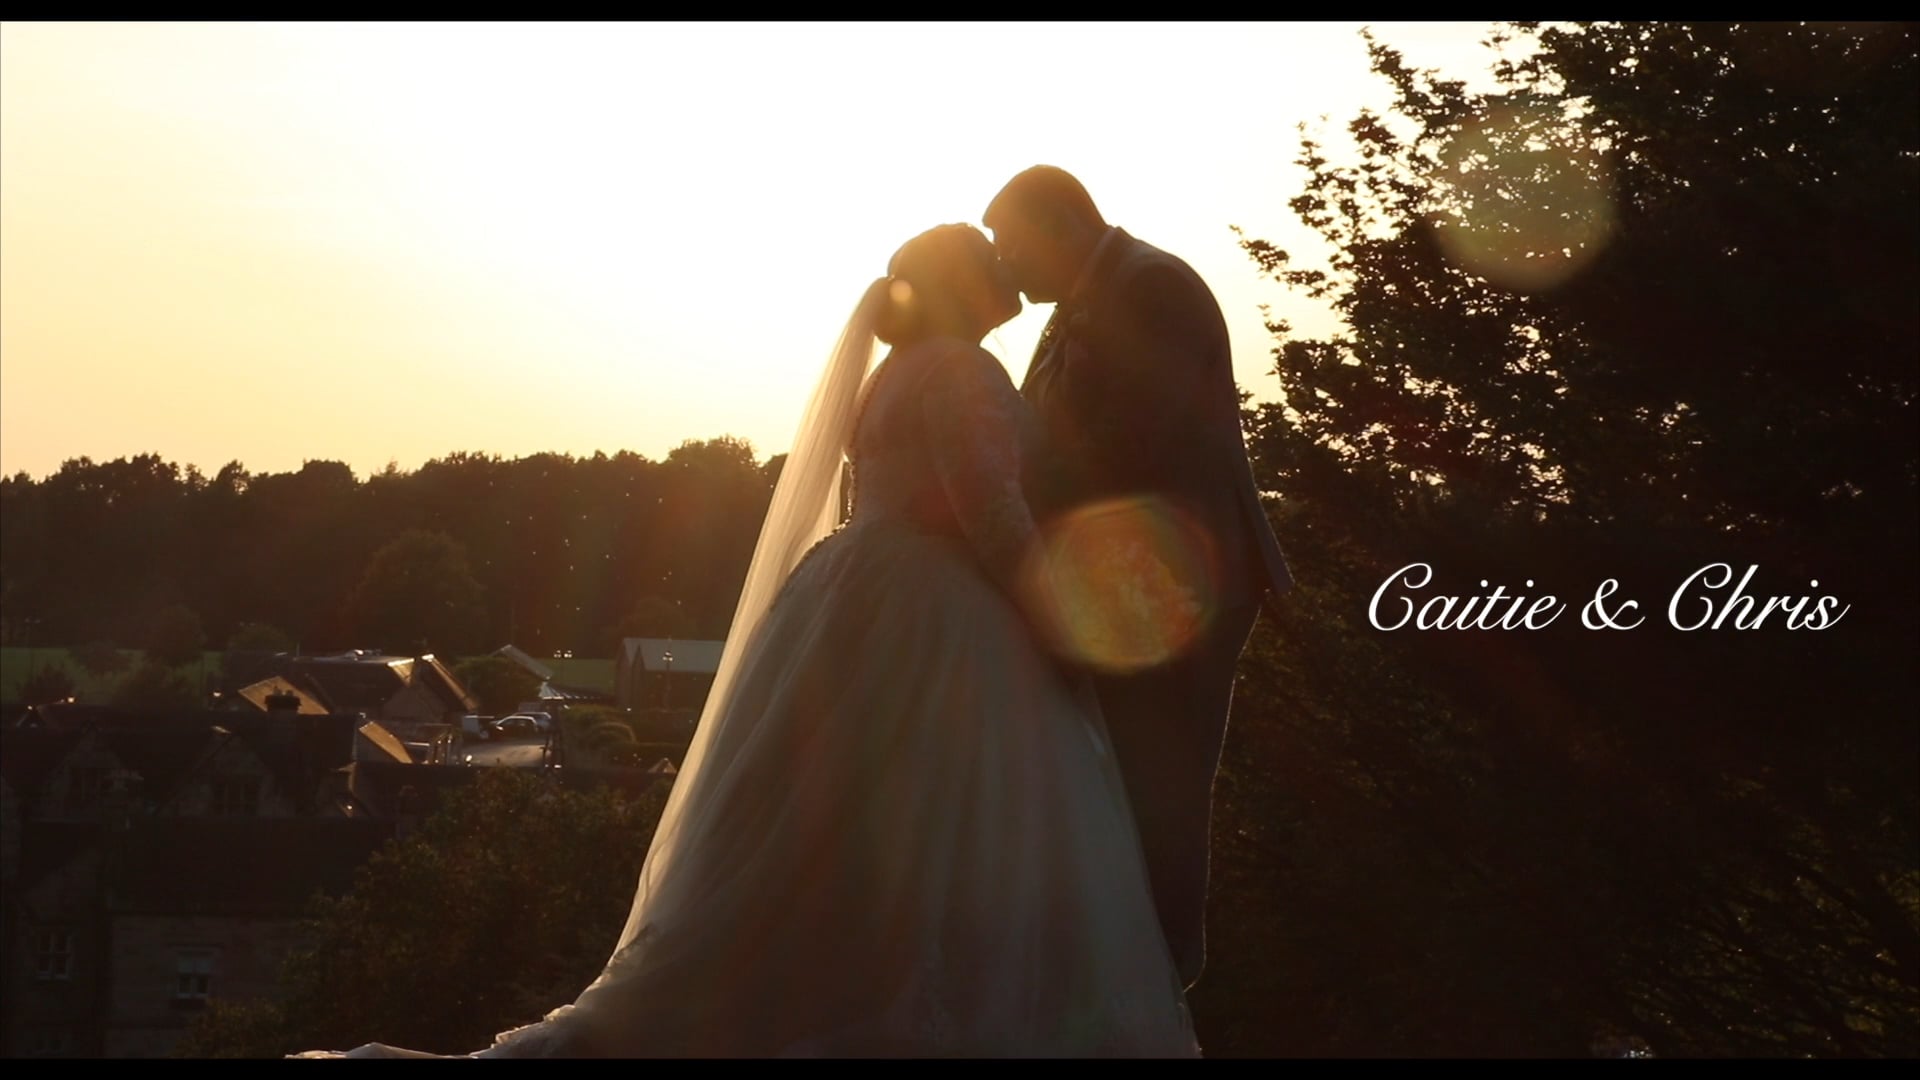 Caitie & Chris Wedding Trailer